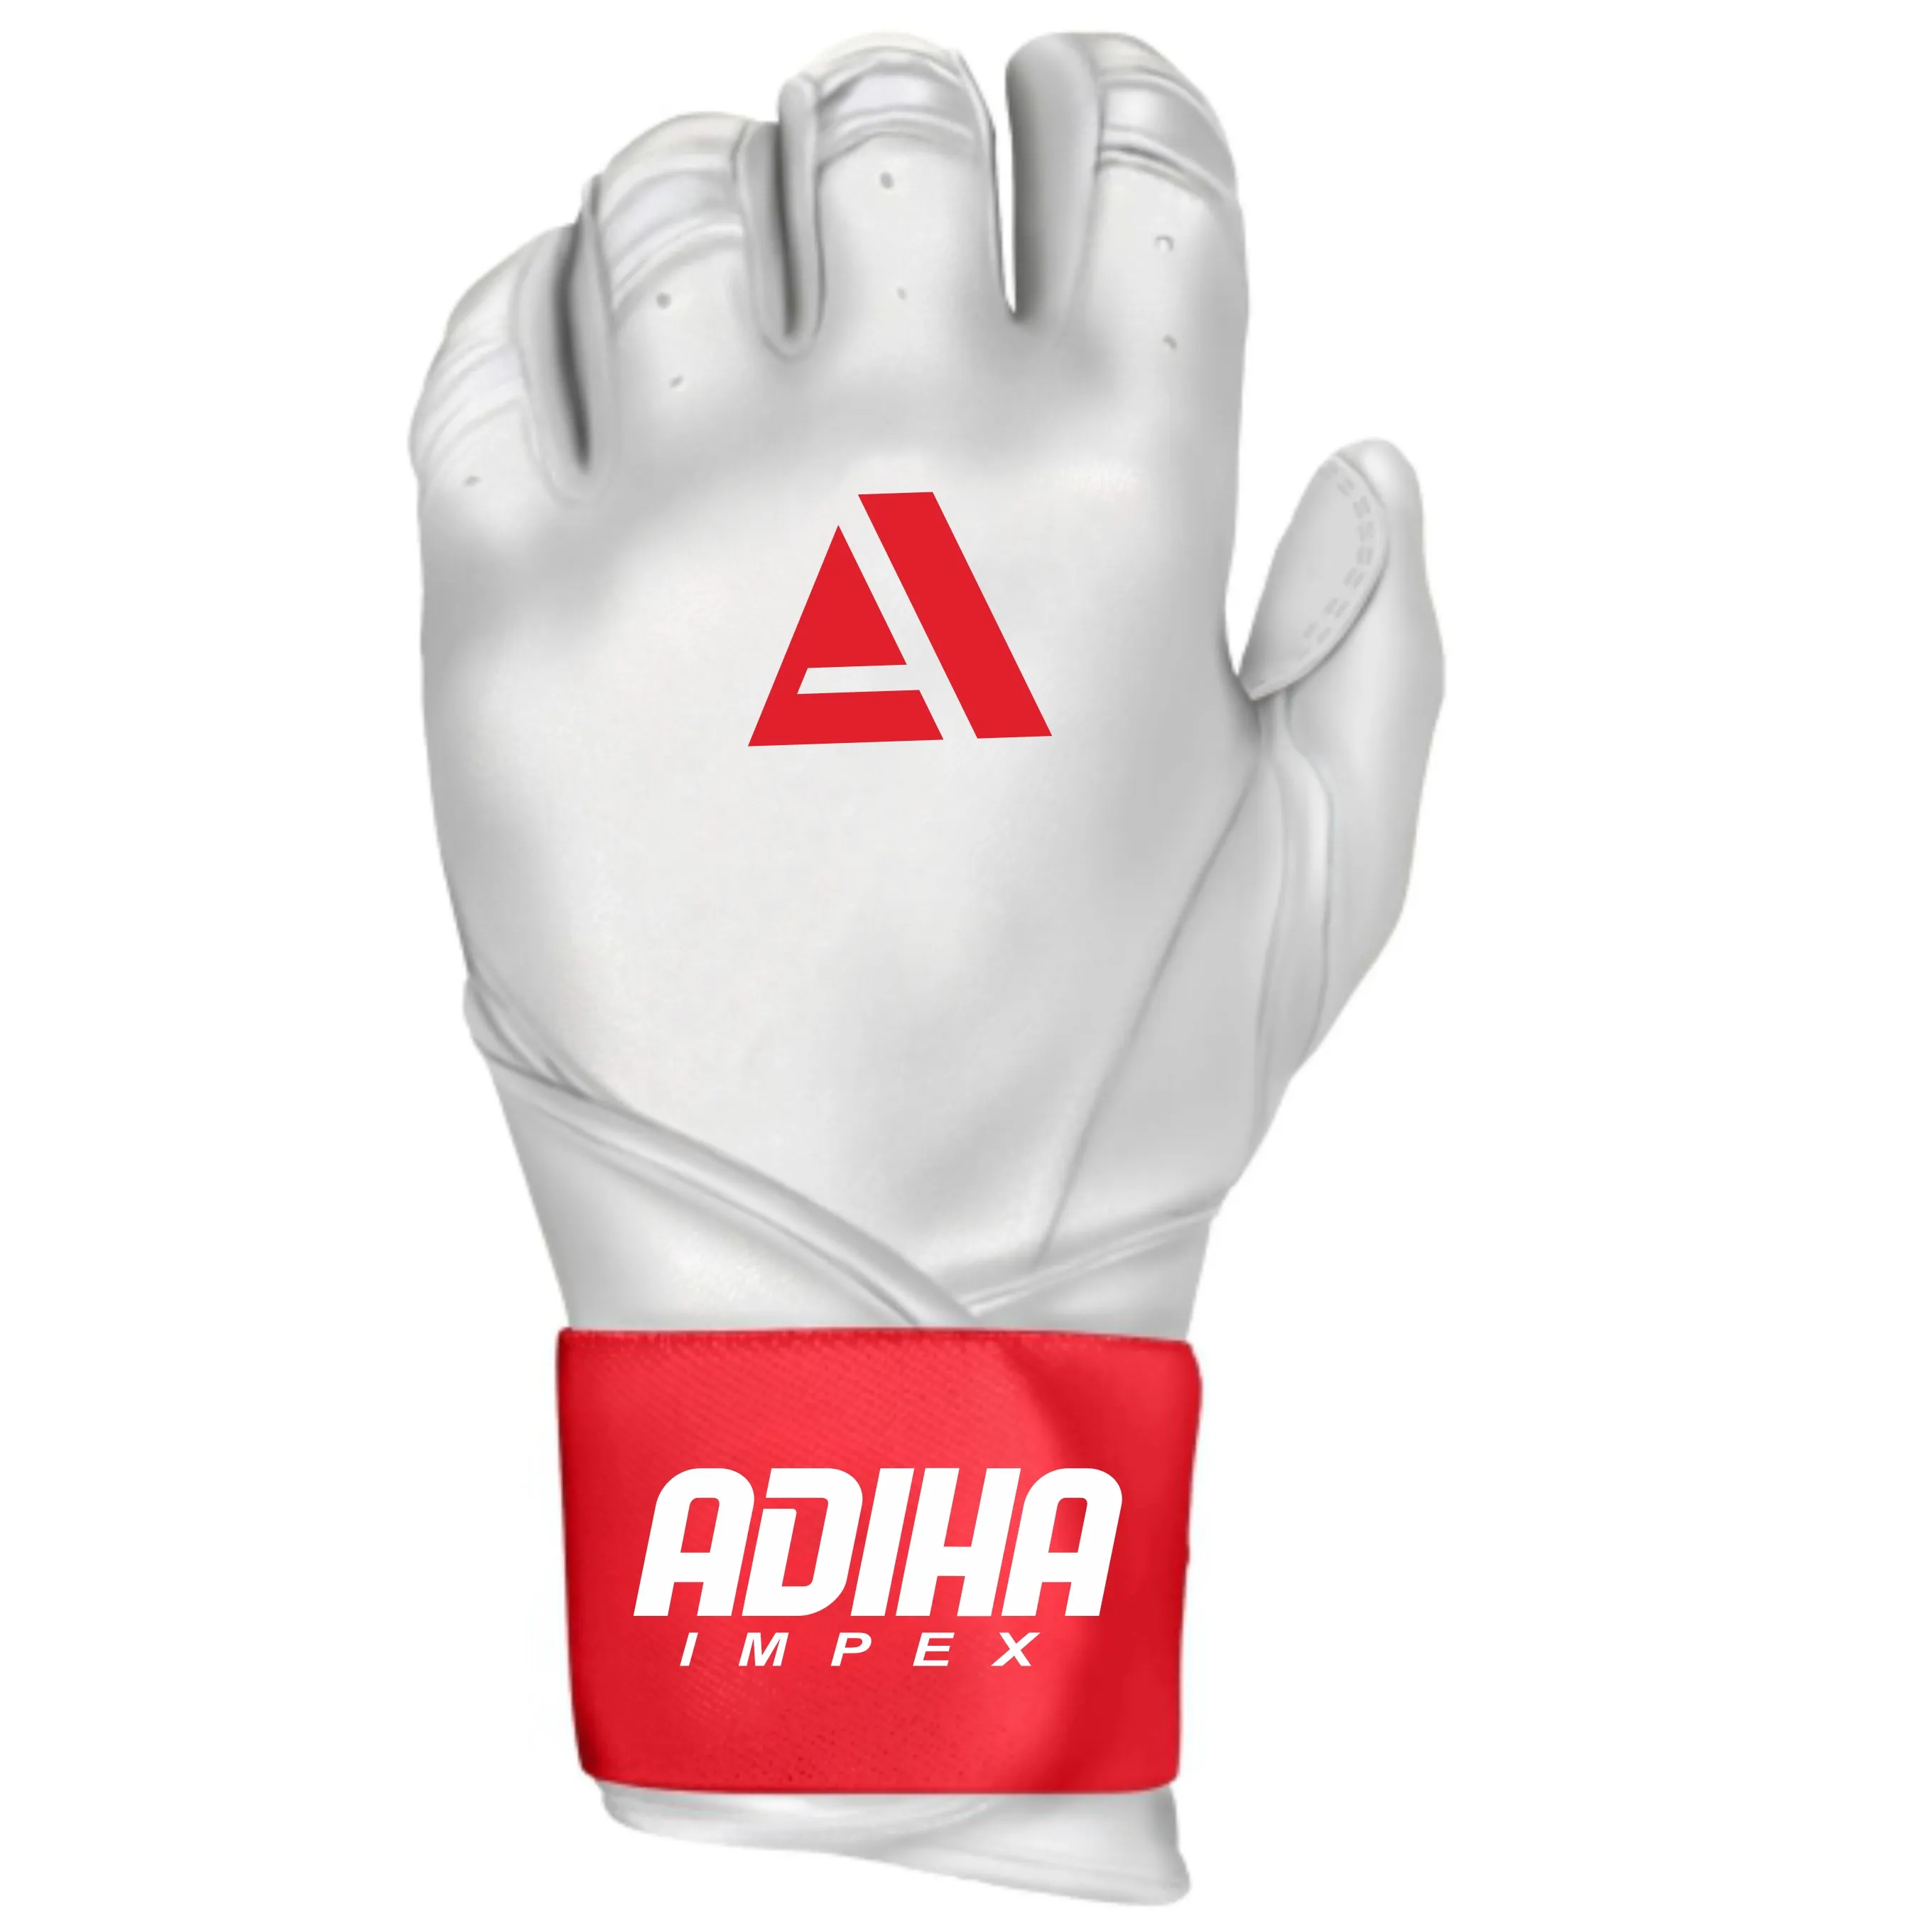 Baseball-Handschuhe hoher Qualität individuelle Baseball-Schlägerhandschuhe mit Premium-Qualität Handschuhe Verpackung